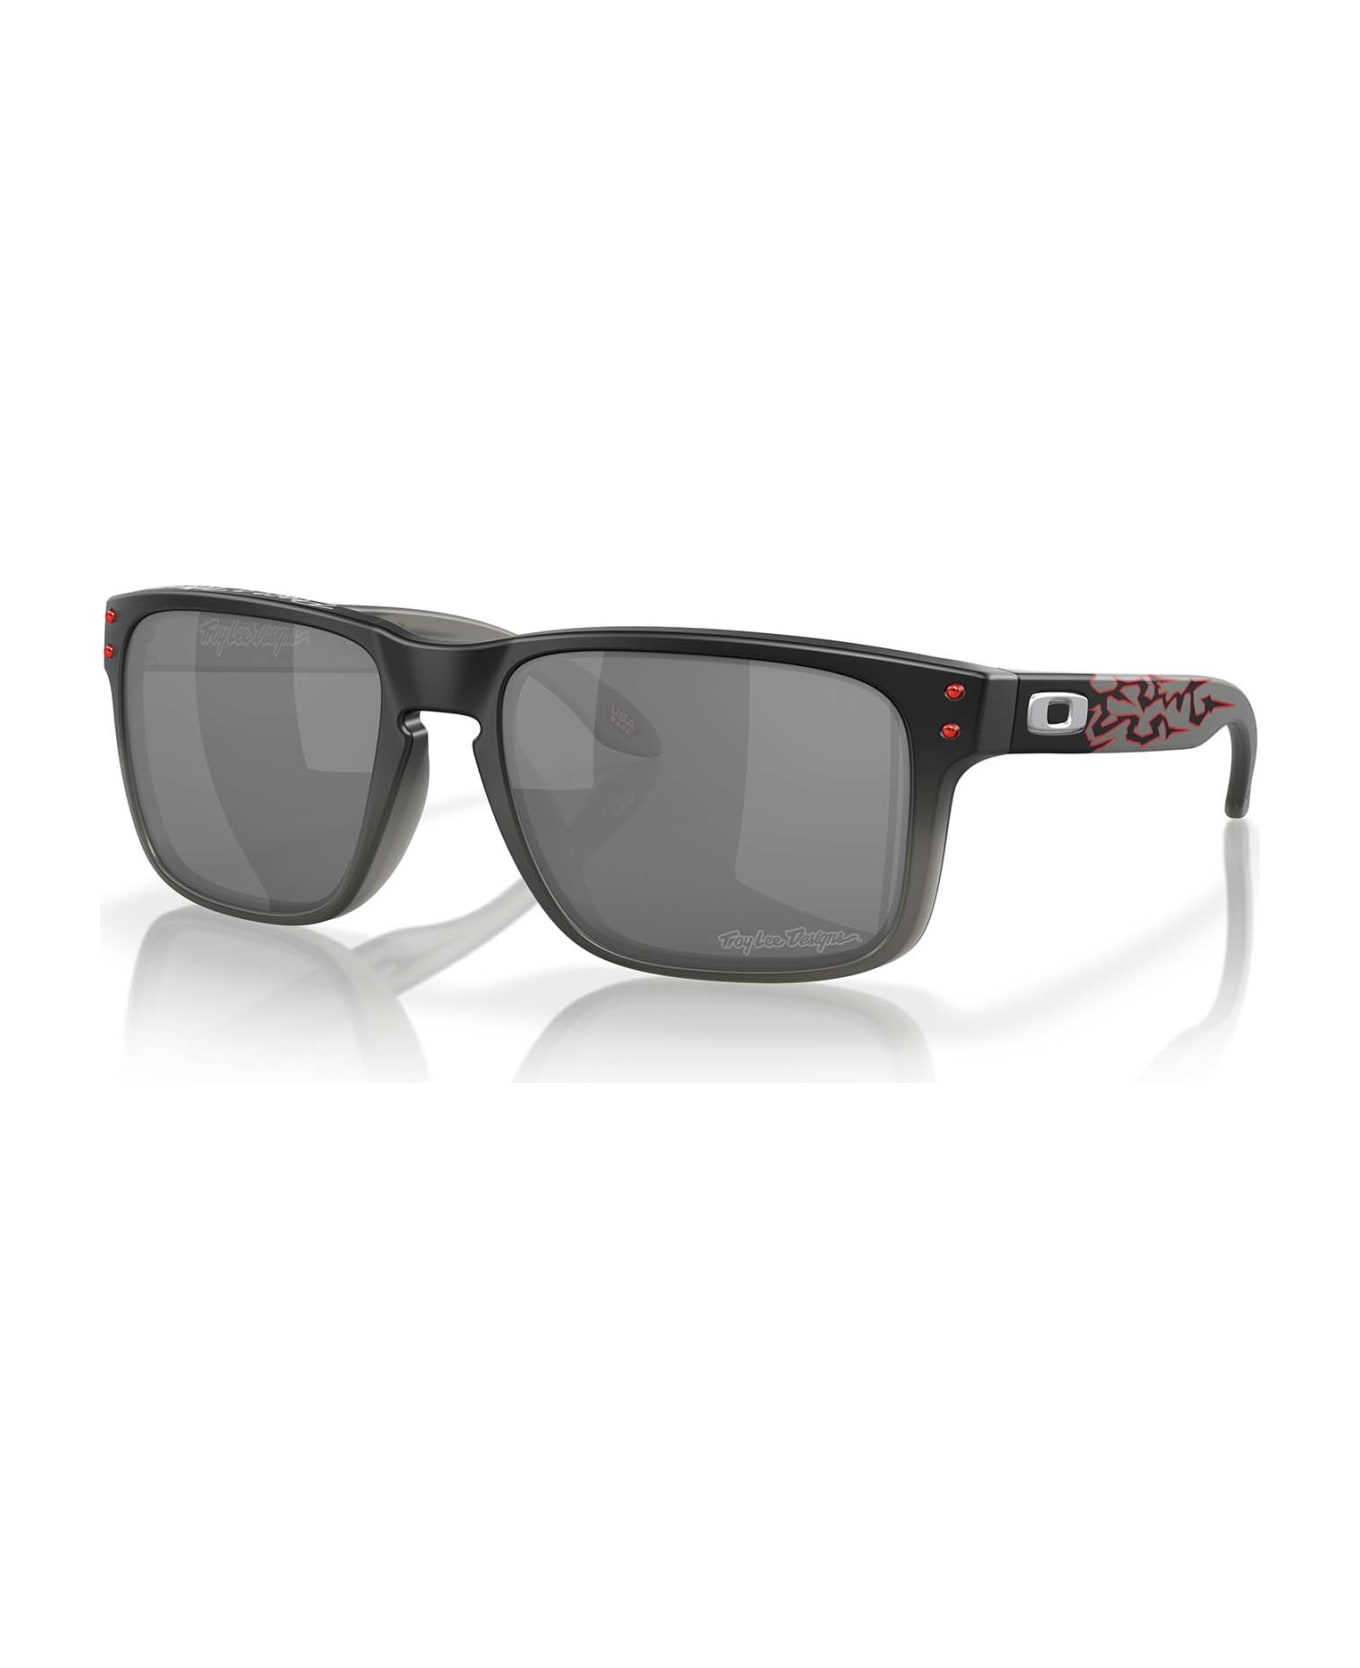 Oakley Oo9102 Troy Lee Designs Black Fade Sunglasses - Troy Lee Designs Black Fade サングラス